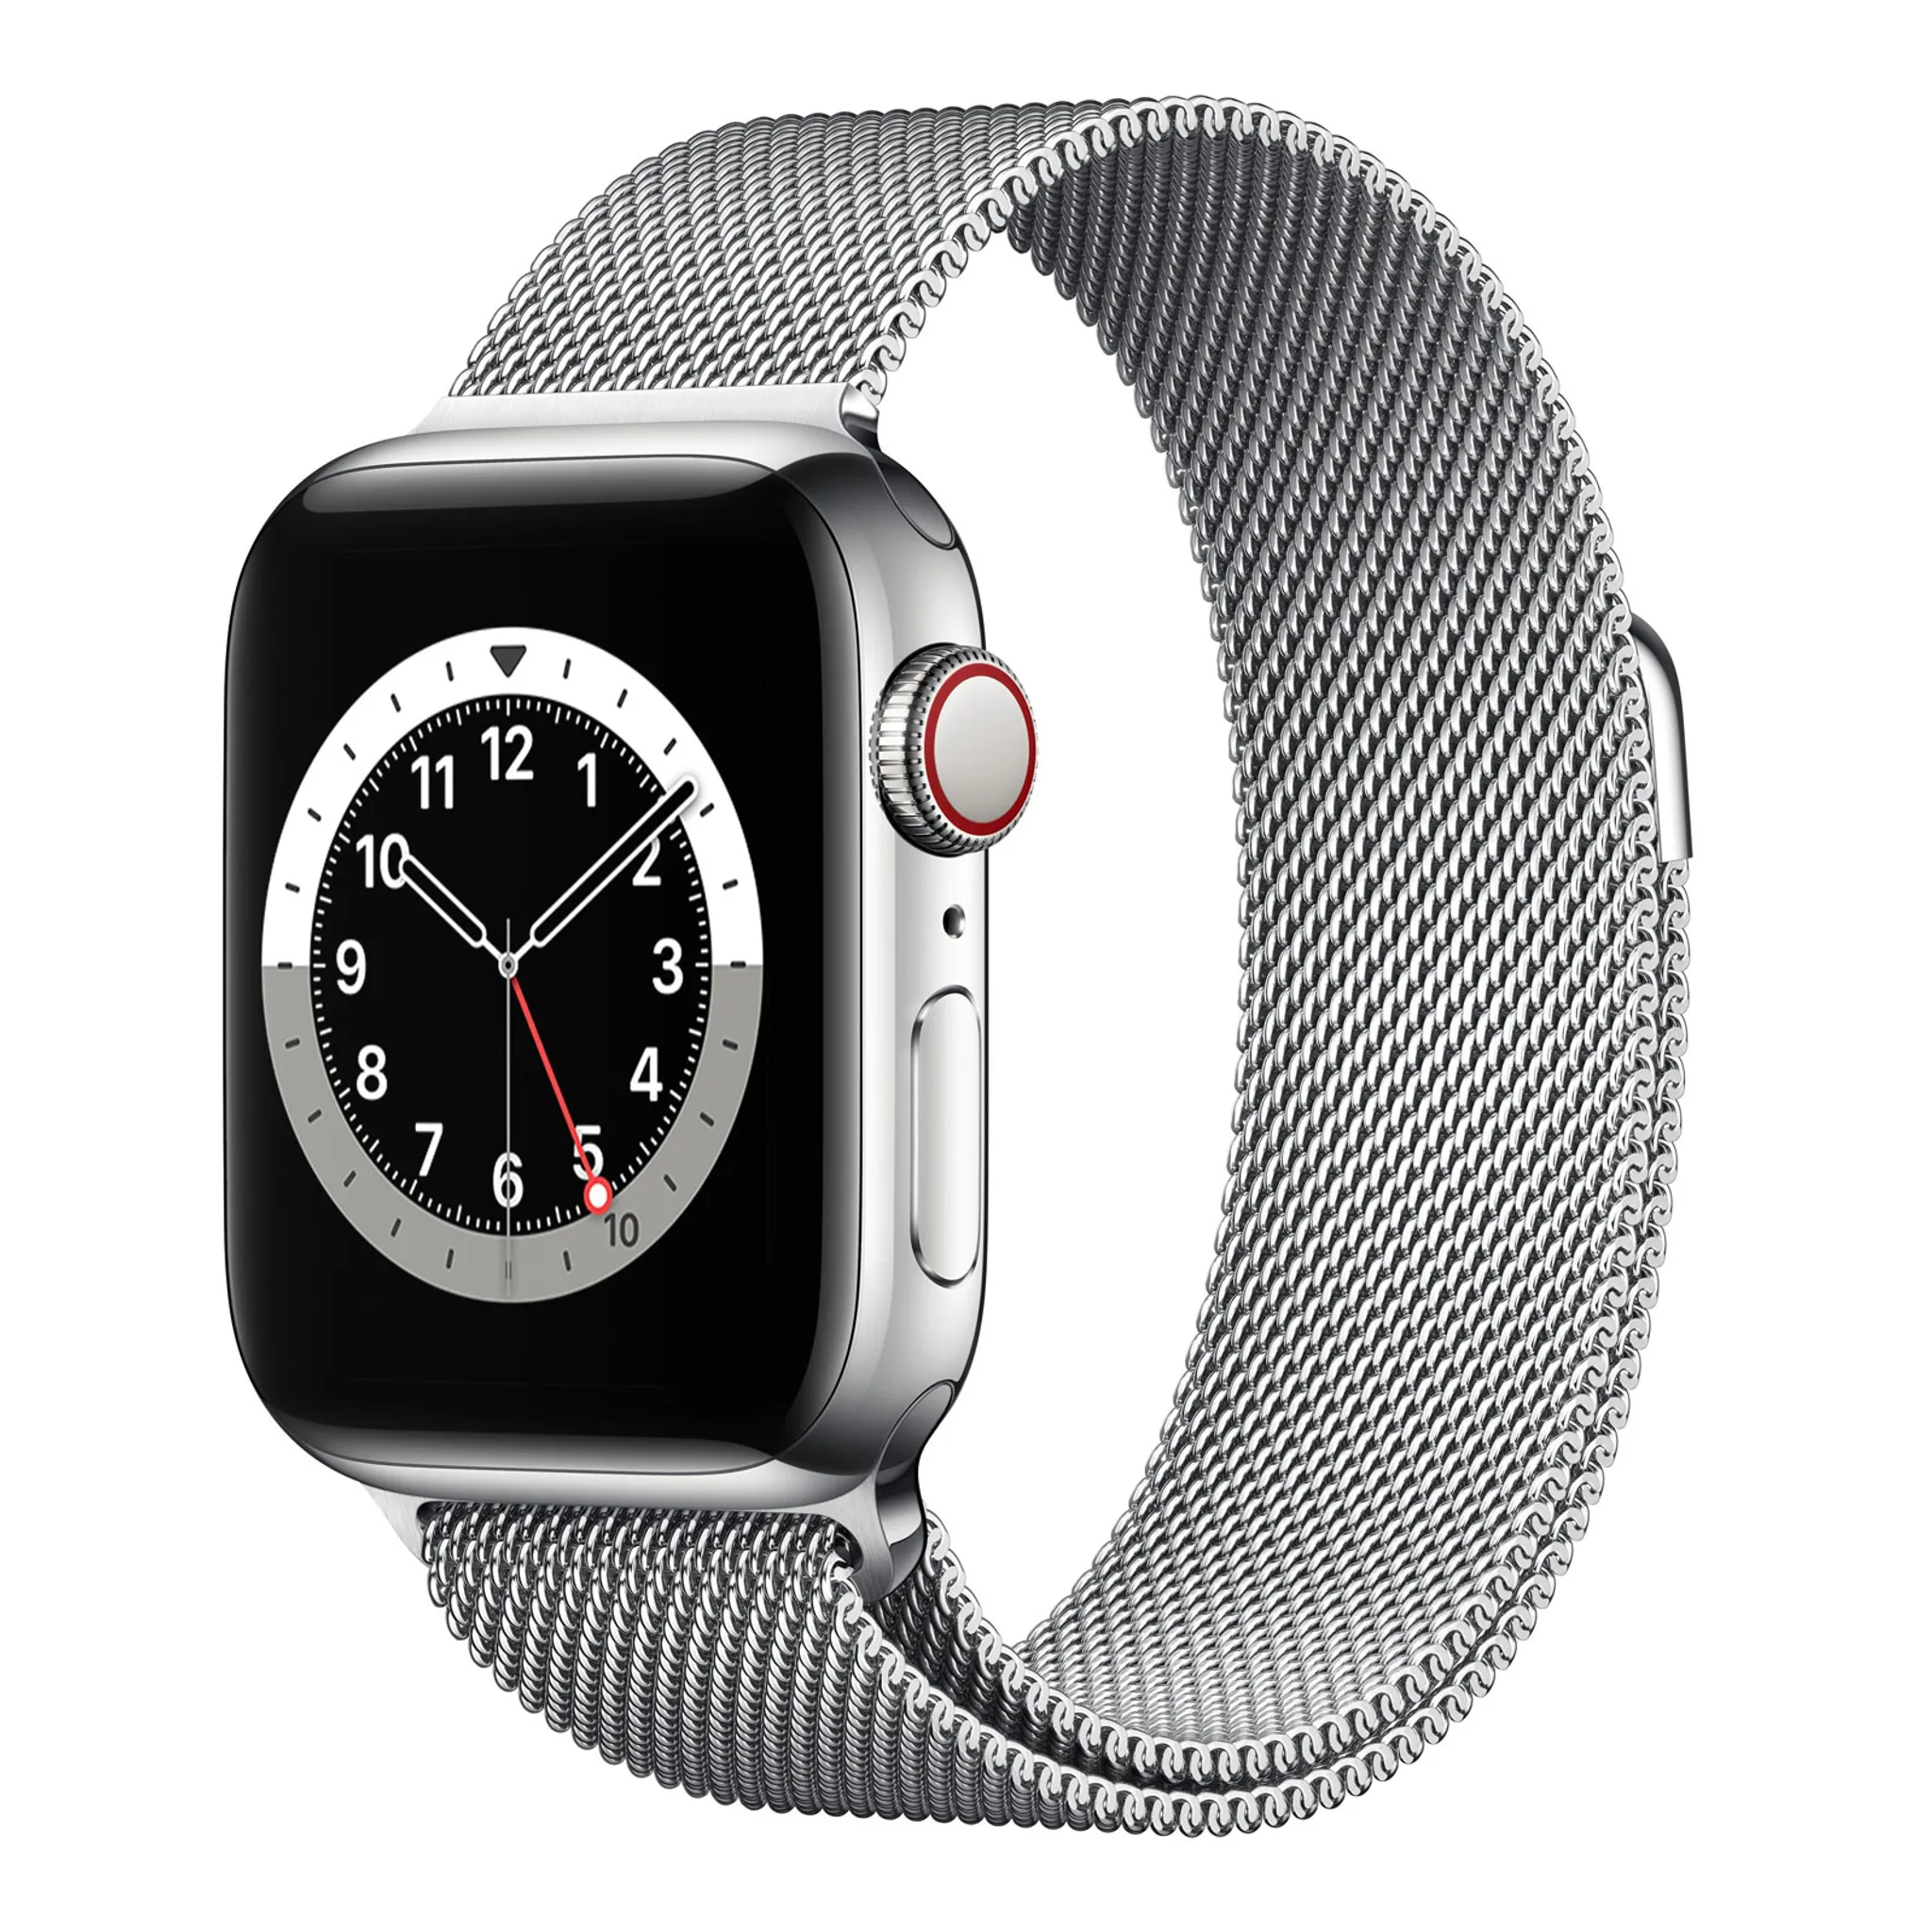 Apple Watch Series 6 1,59 Zoll Smartwatch